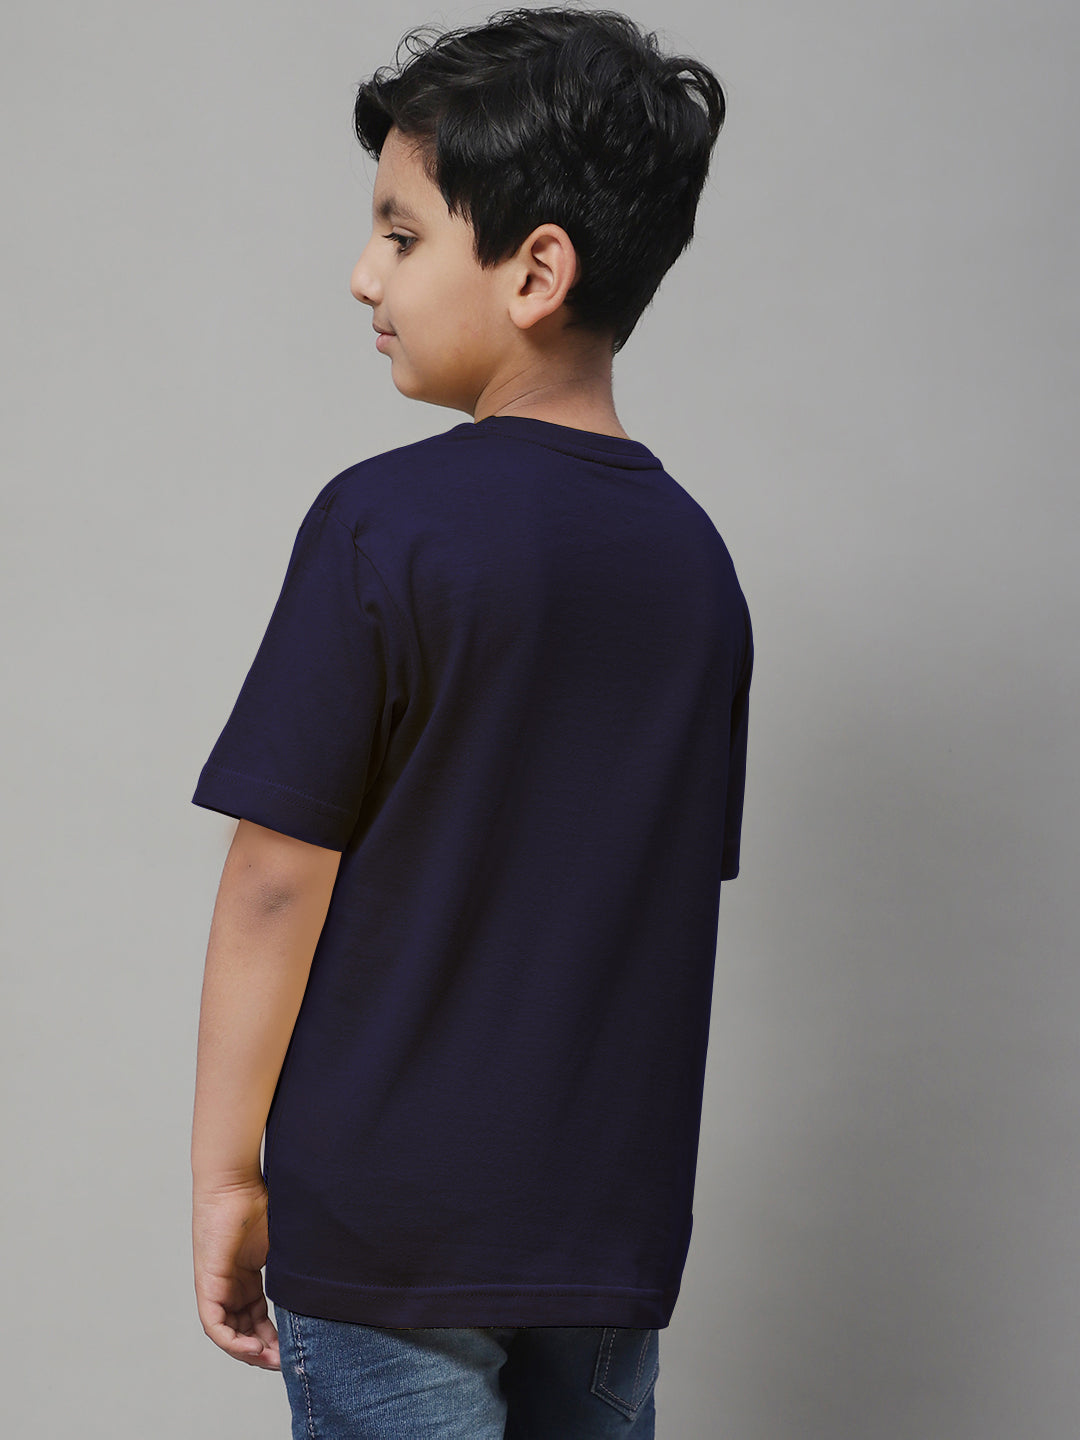 Kids Cool Vibes Regular Fit Cotton T-Shirt - Friskers